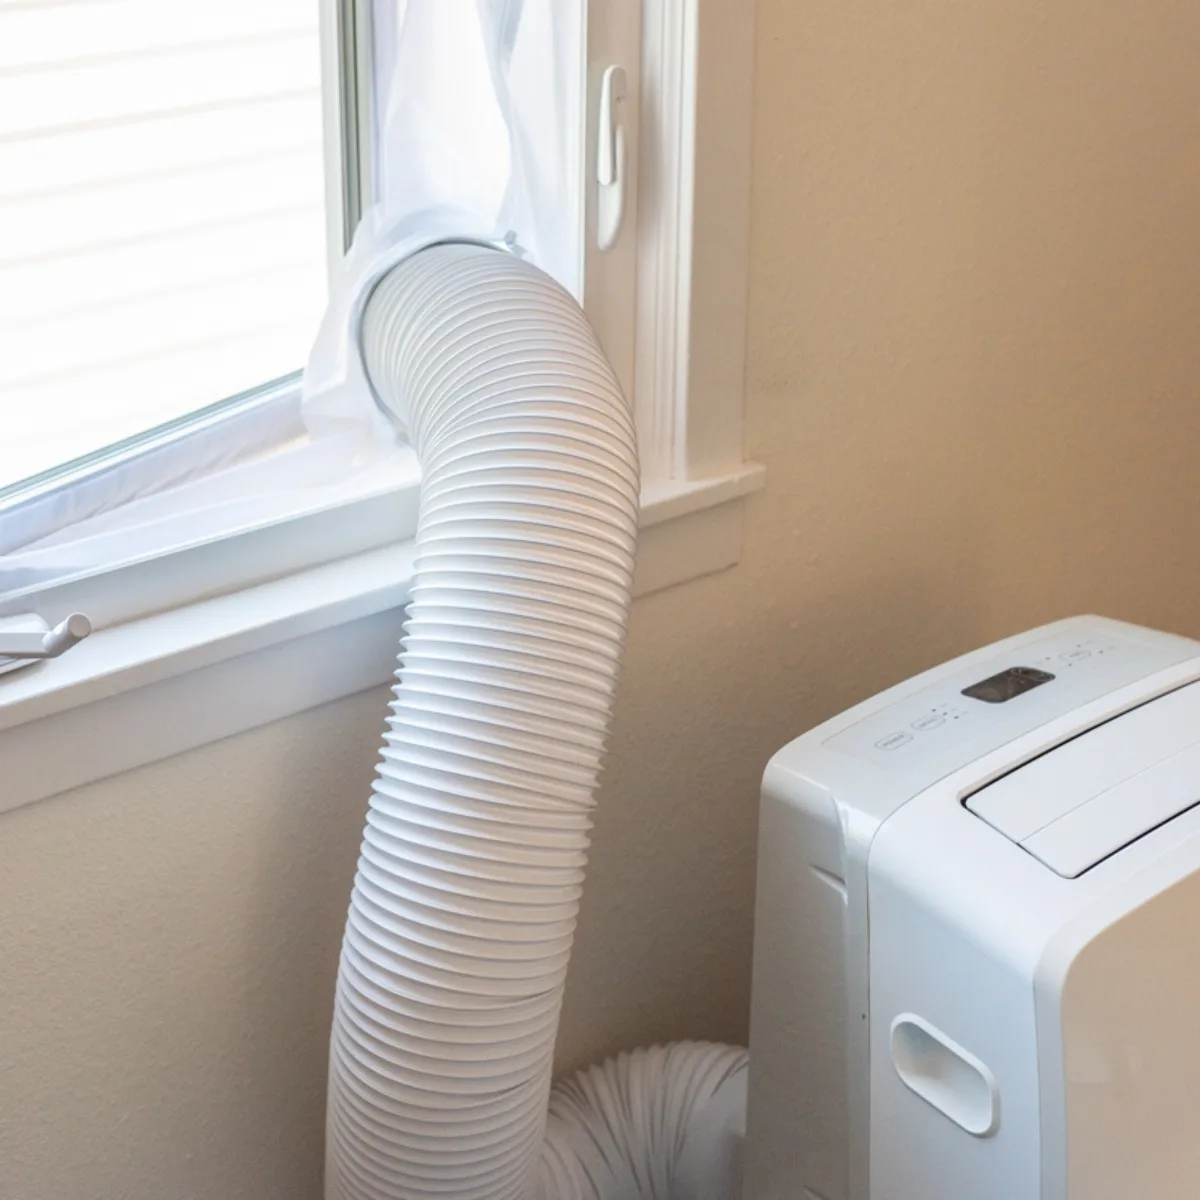 air conditioner in casement window